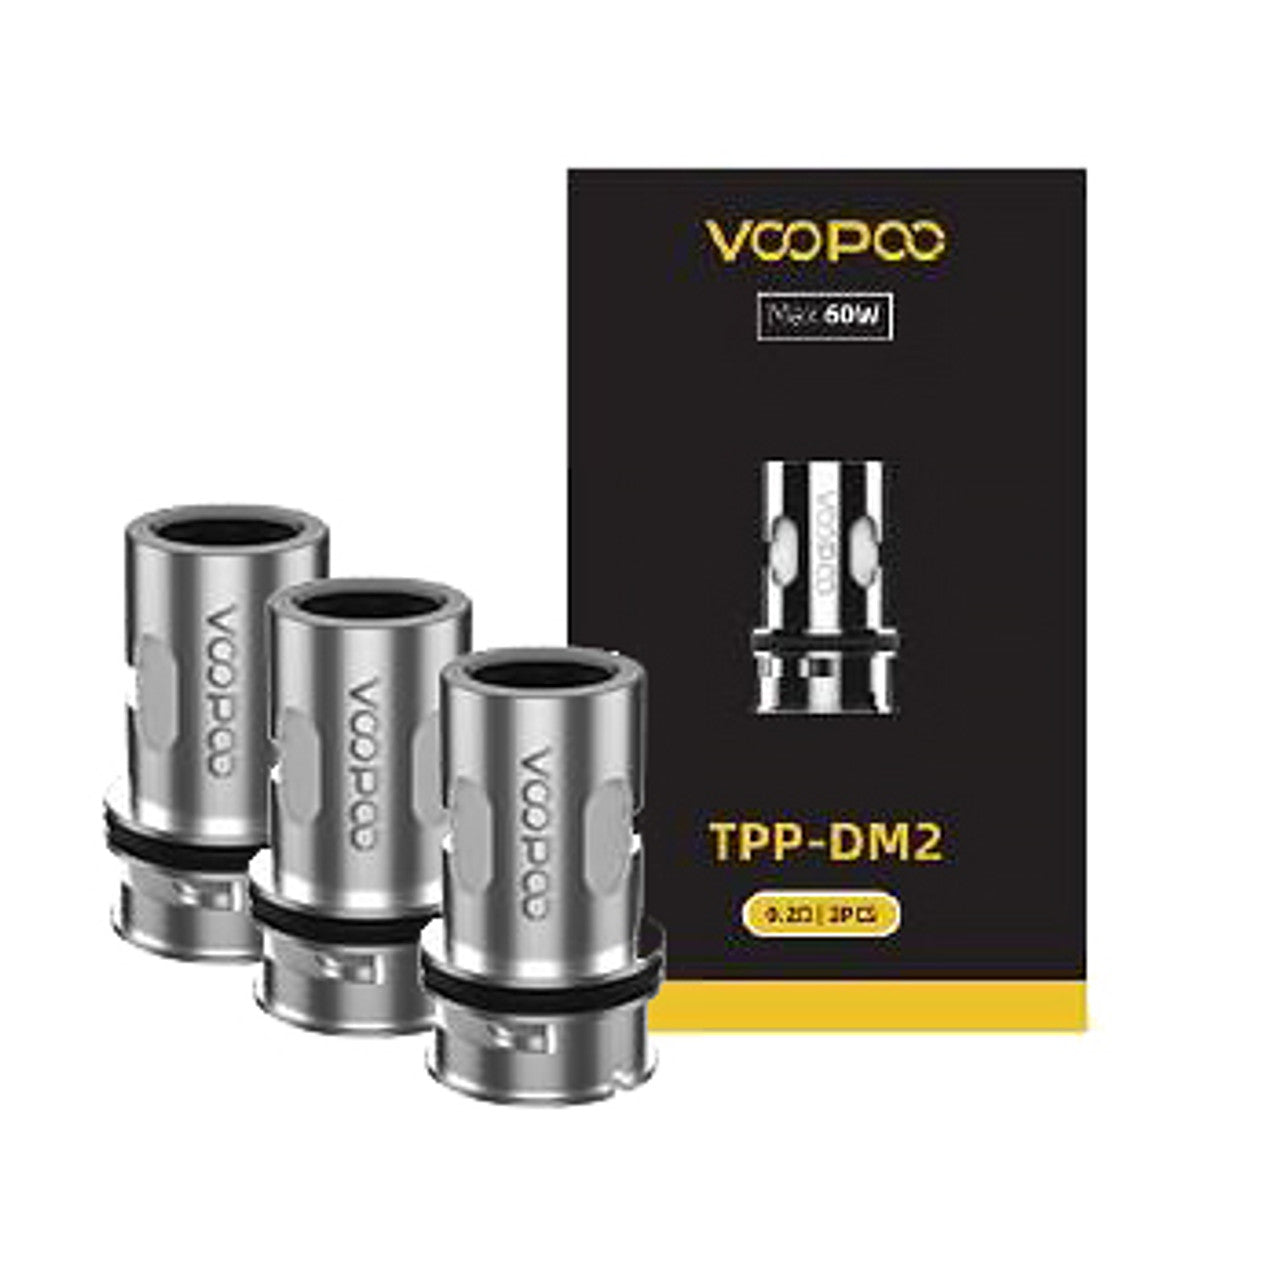 Voopoo - TPP DM2 0.2Ω 60W - Coils (Box of 3) - MK Distro